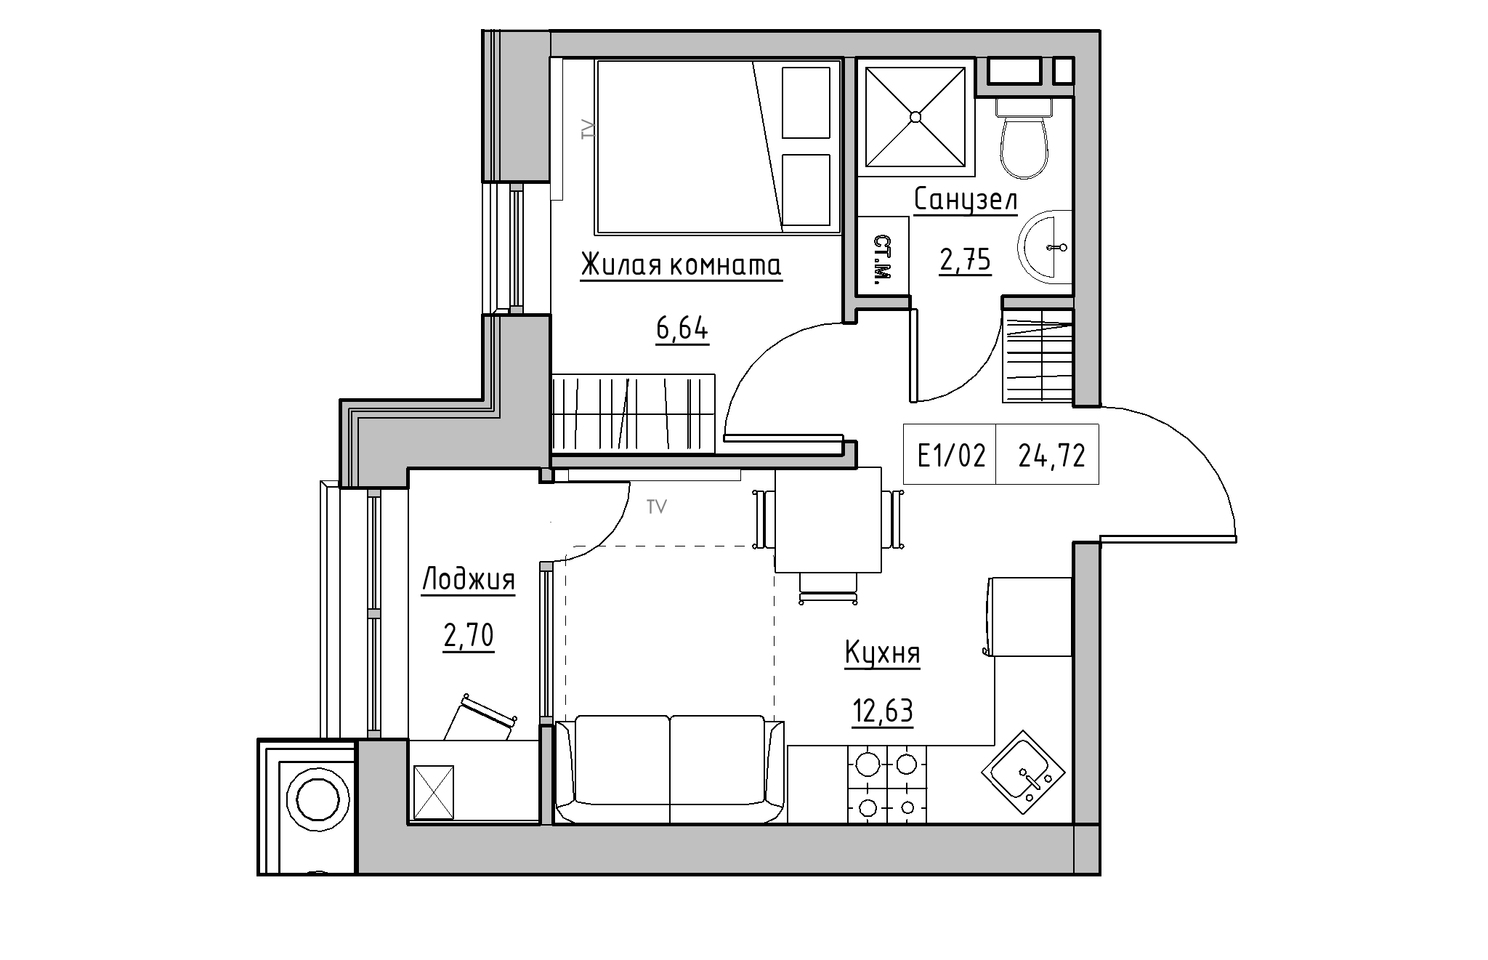 Planning 1-rm flats area 24.72m2, KS-010-05/0016.